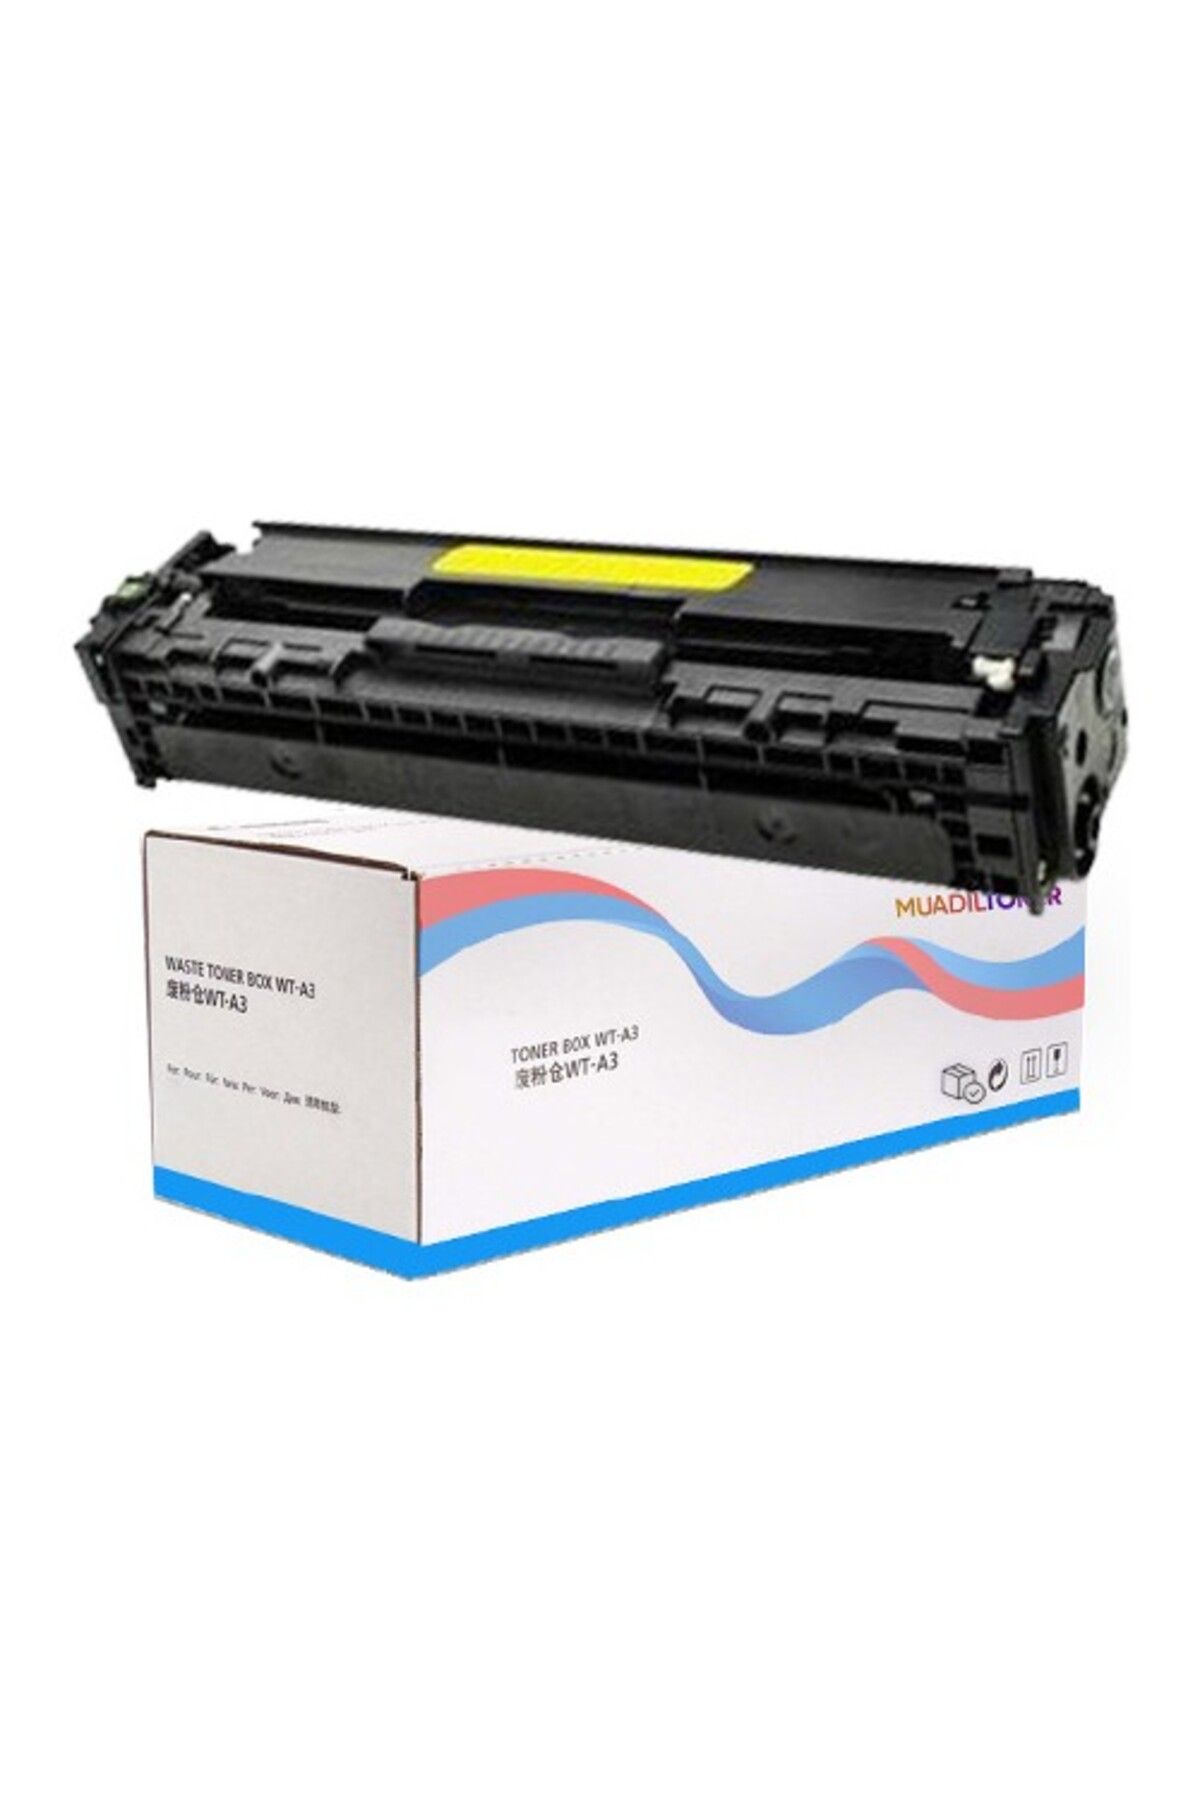 Colorprint Colorful Toner Hp Color Laserjet Cp1525nw Yazıcı Uyumlu Muadil Toner Sarı 128a